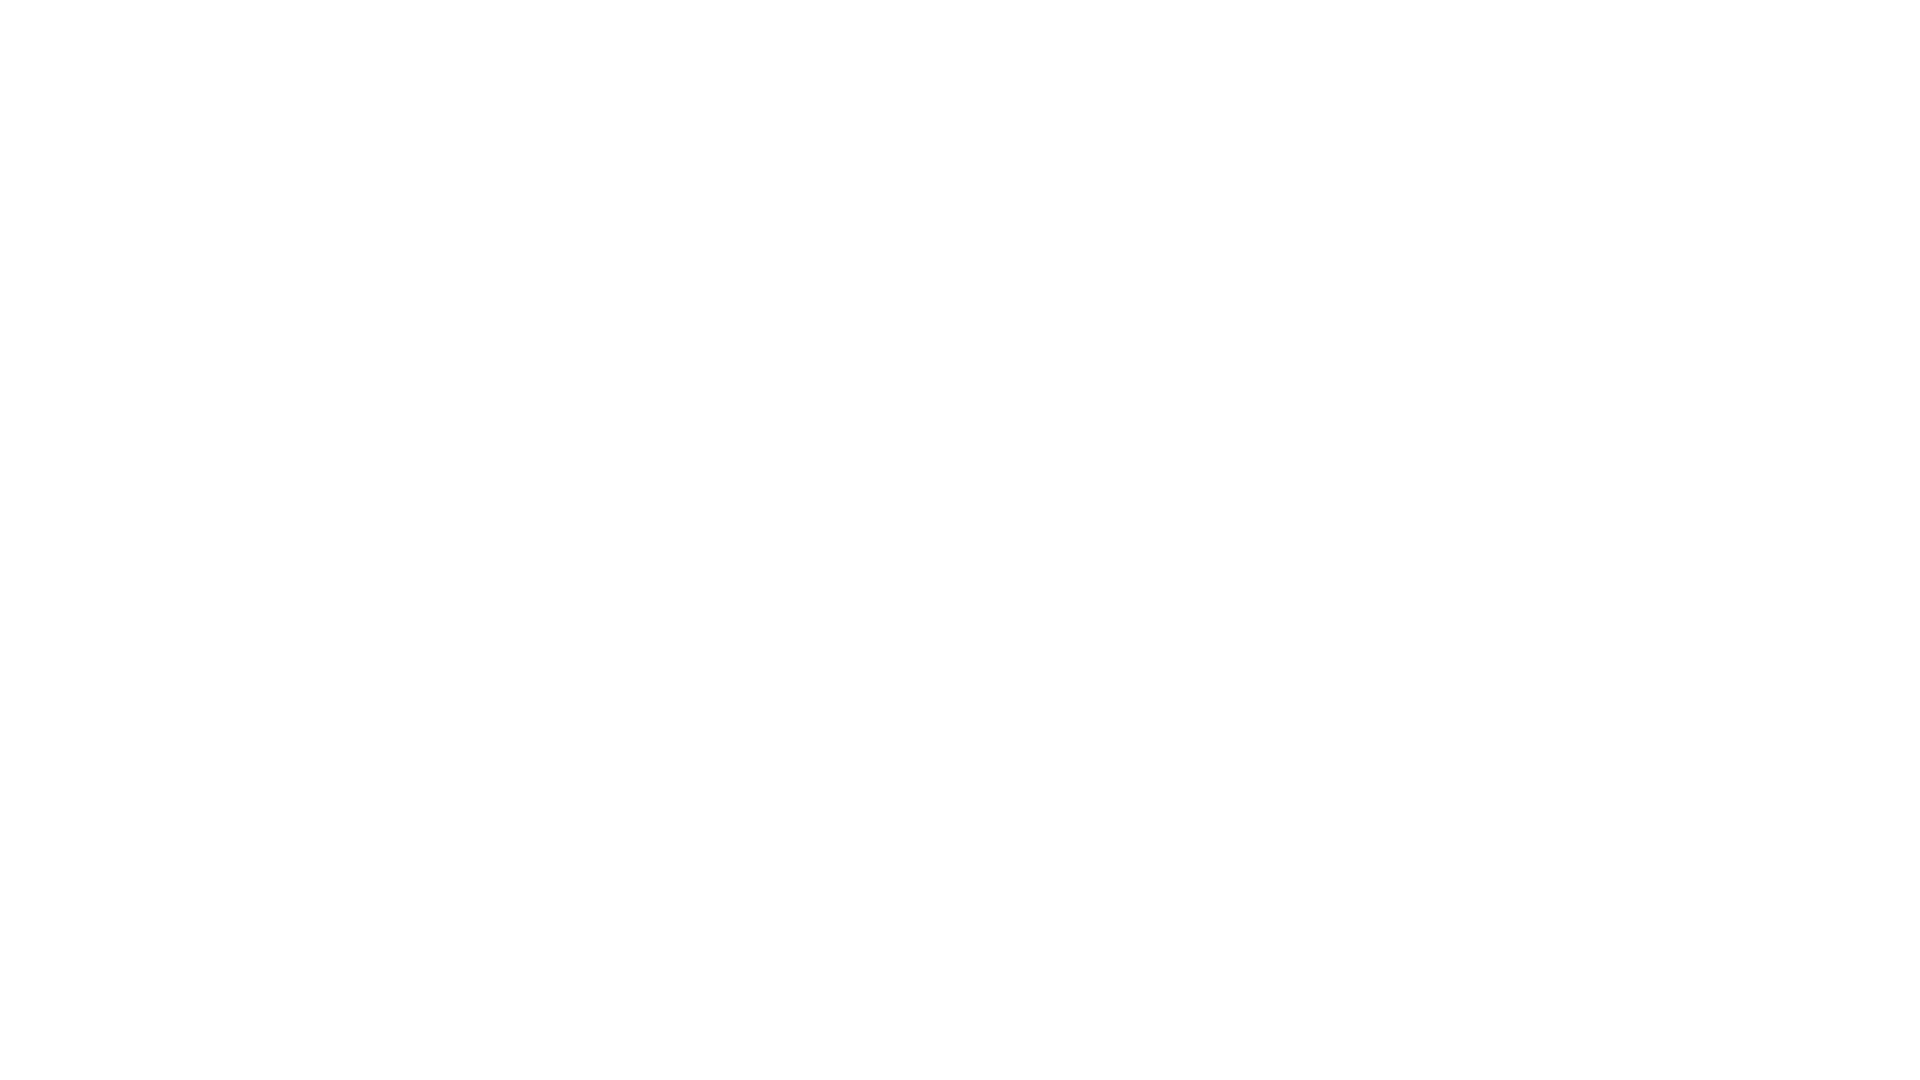 Asel Agro Park